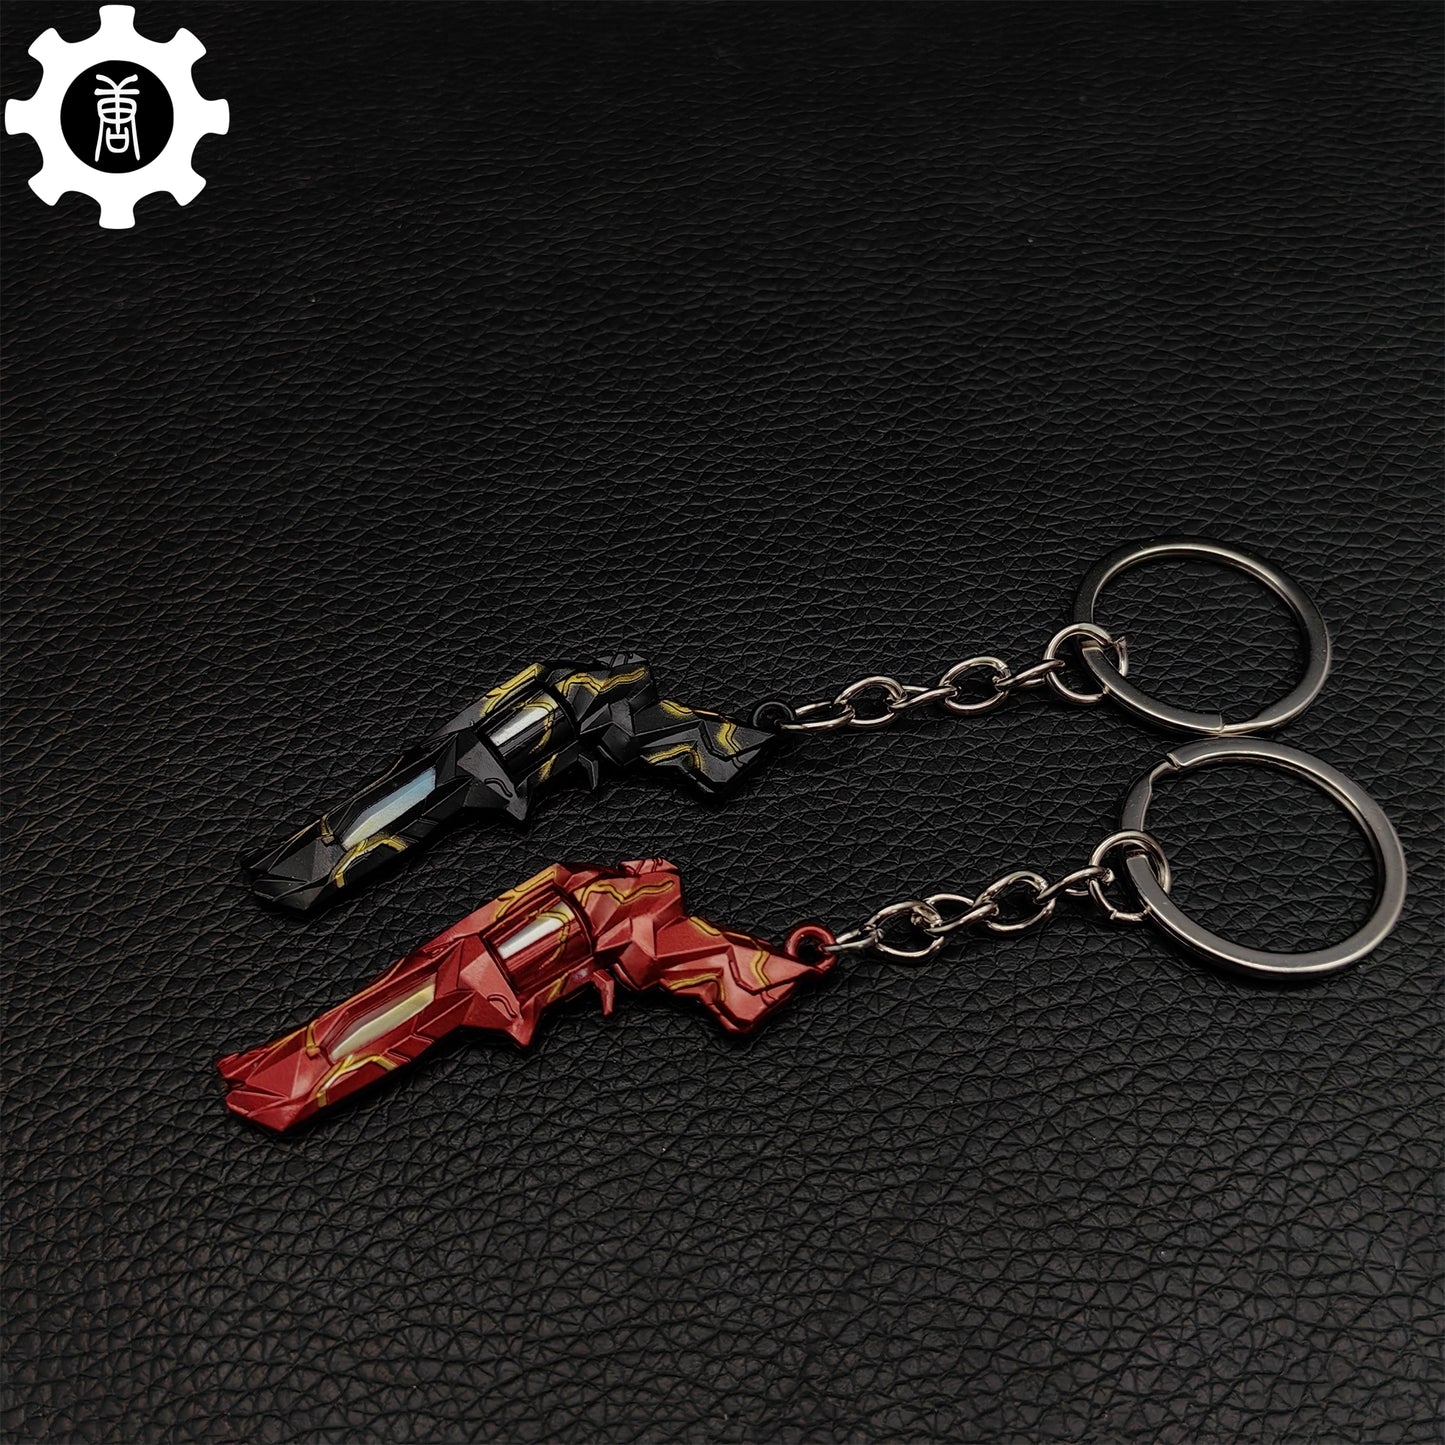 Metal Singularity Sheriff Gun Tiny KeyChain Pendant